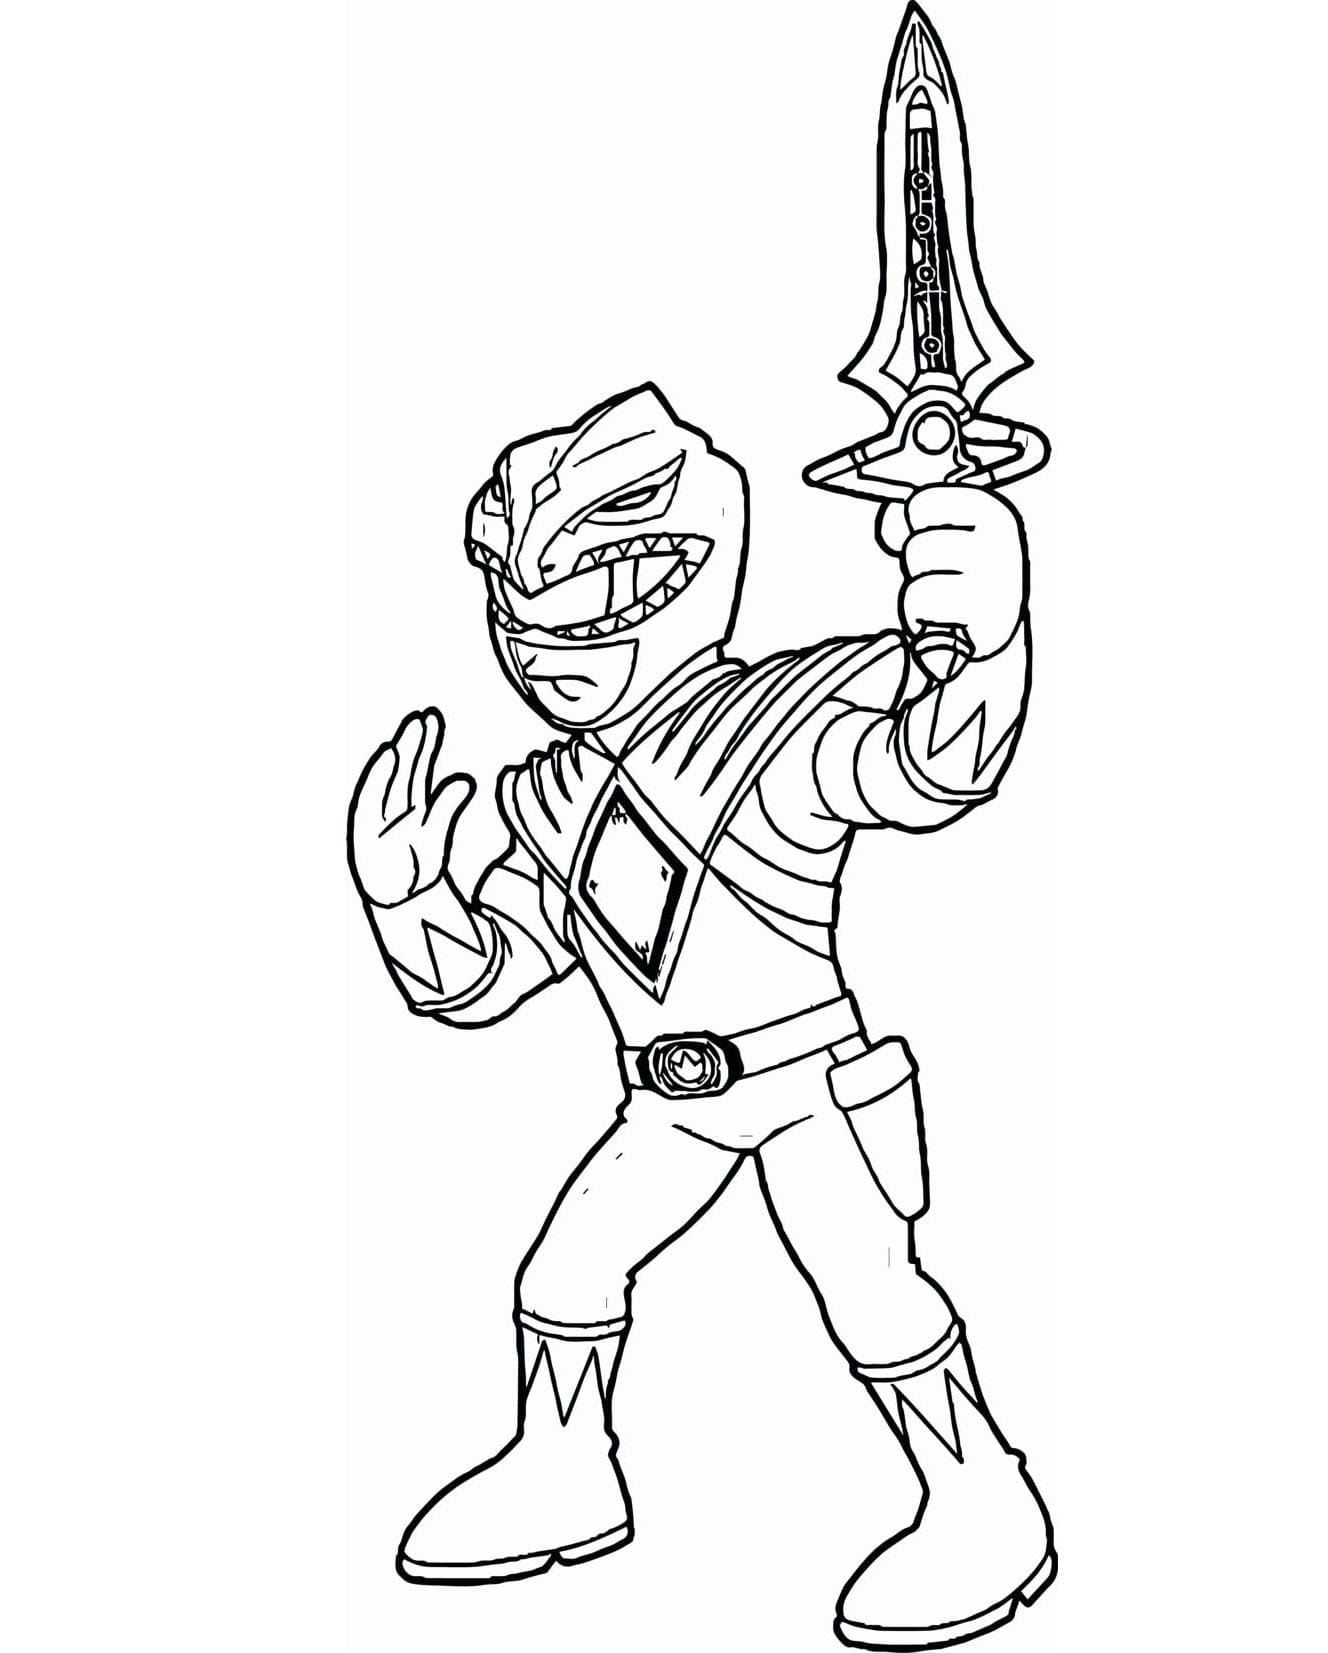 Chibi Power Ranger